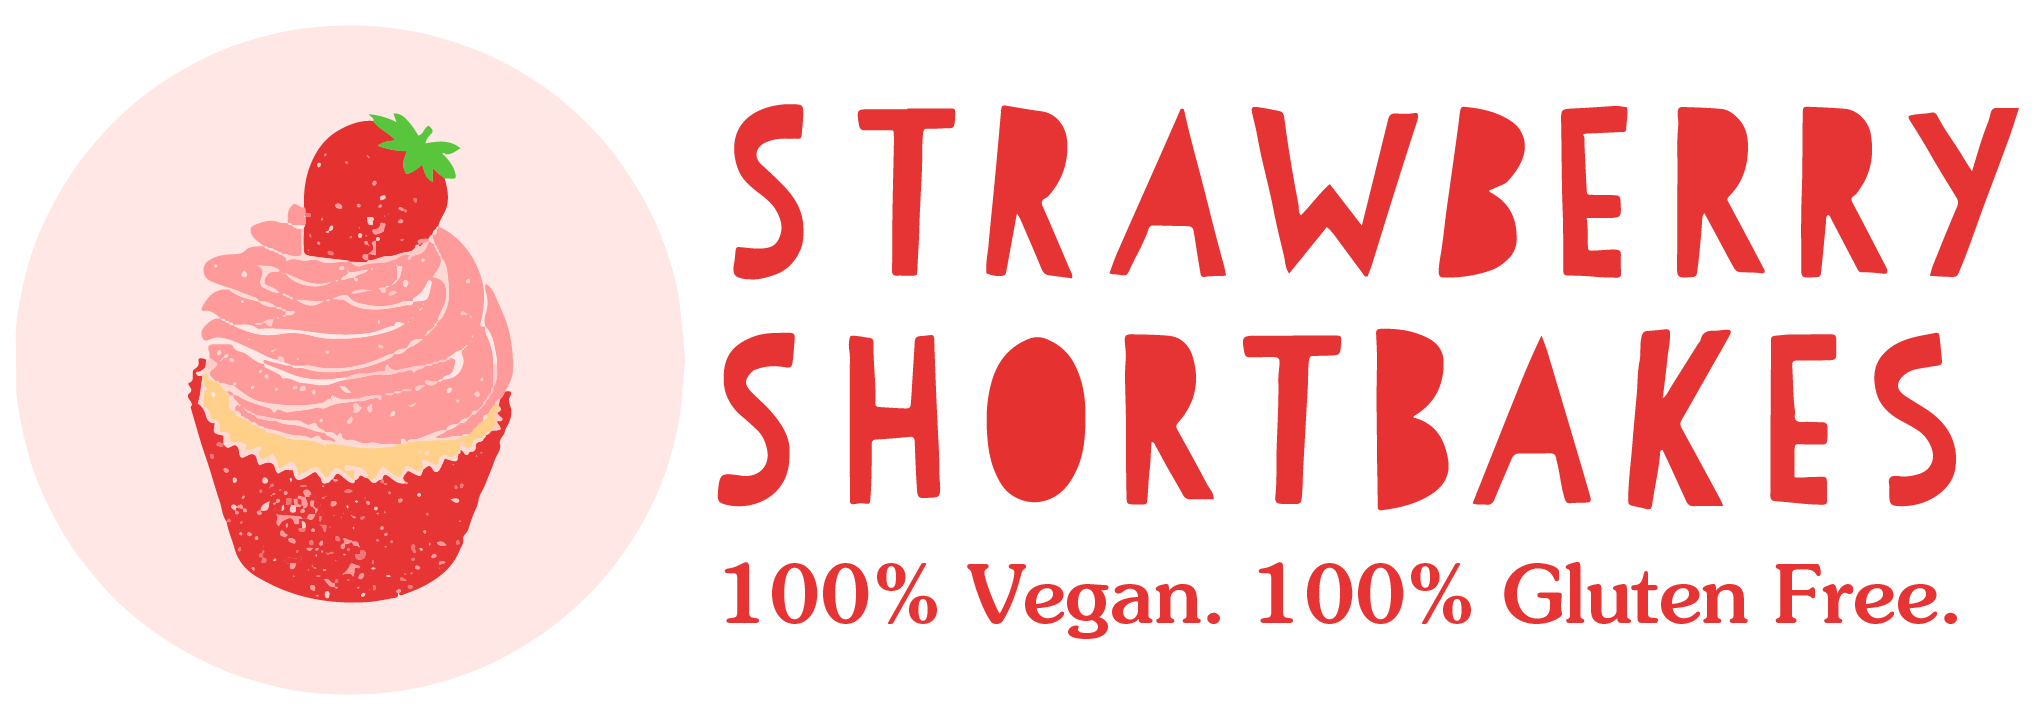 Strawberry Shortbakes